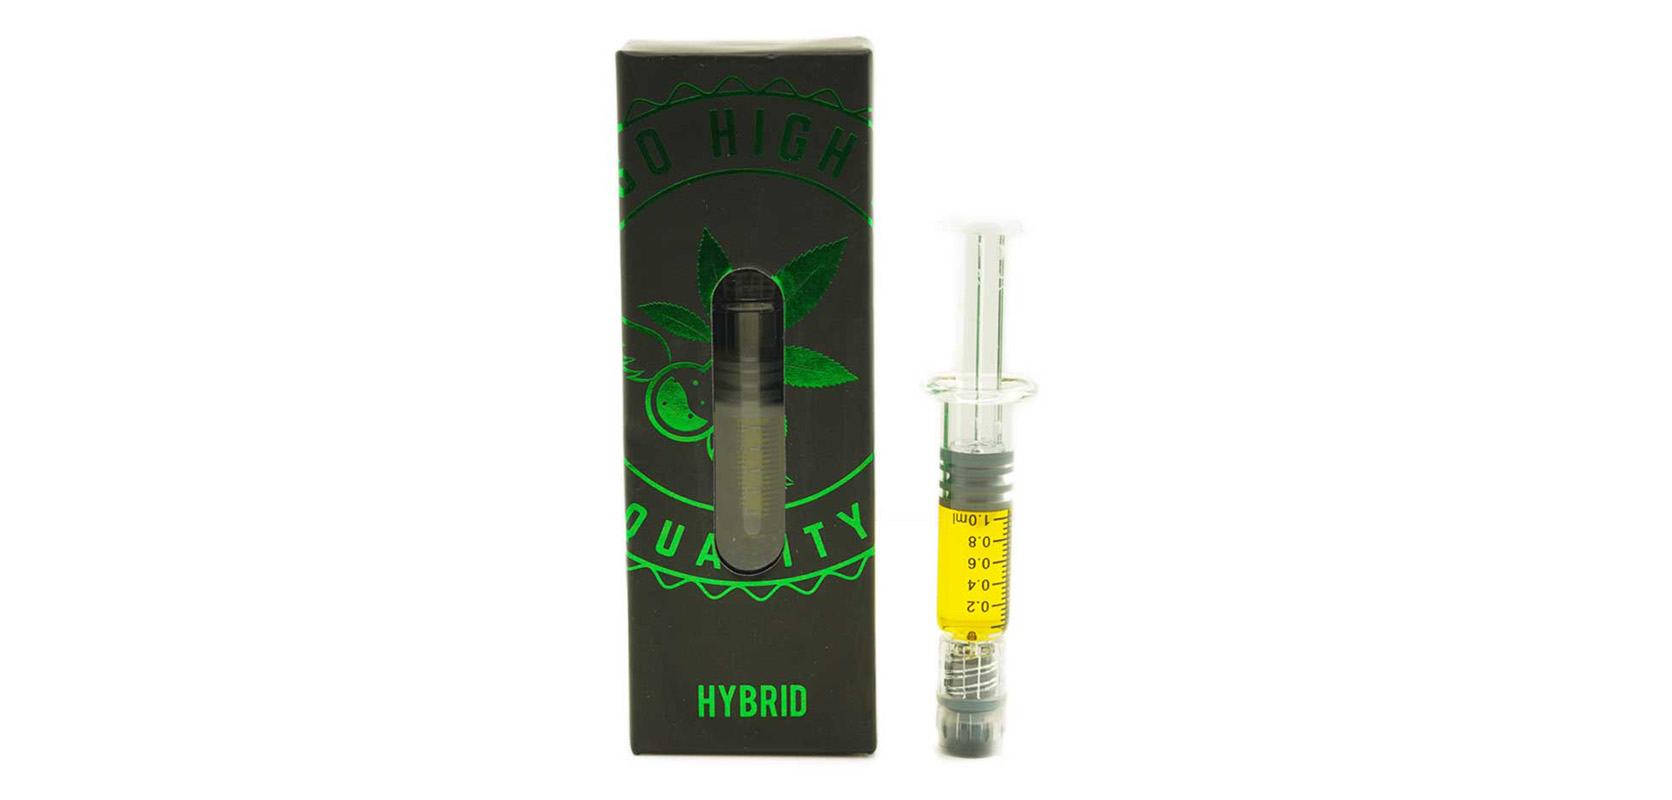 So High Premium Banana Kush Distillate Syringe (Hybrid) For Sale. Buy Weed Online in Canada.